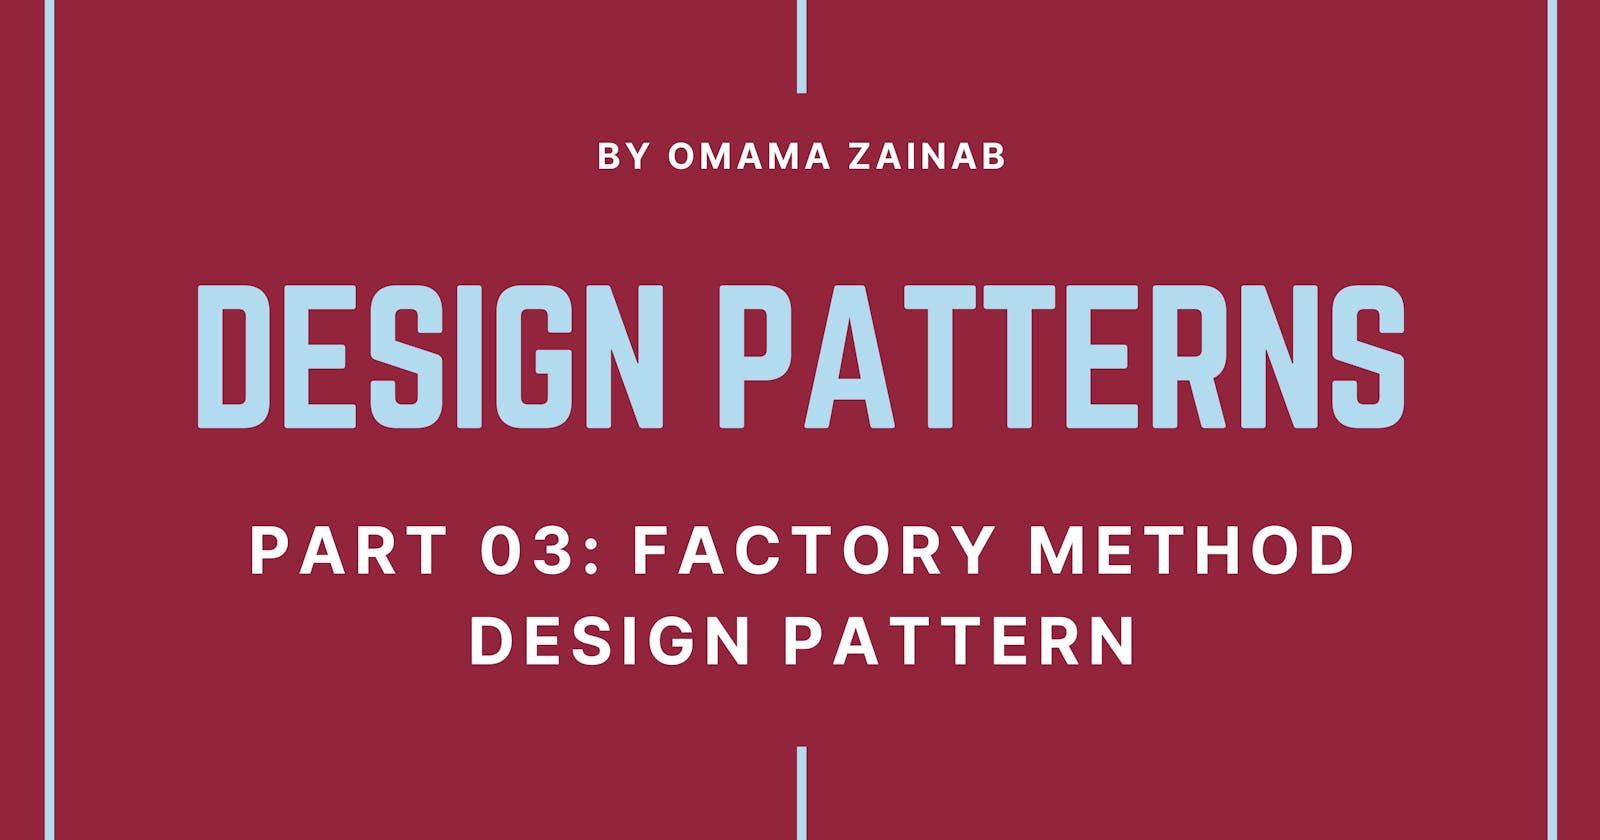 Part 03: Factory Method